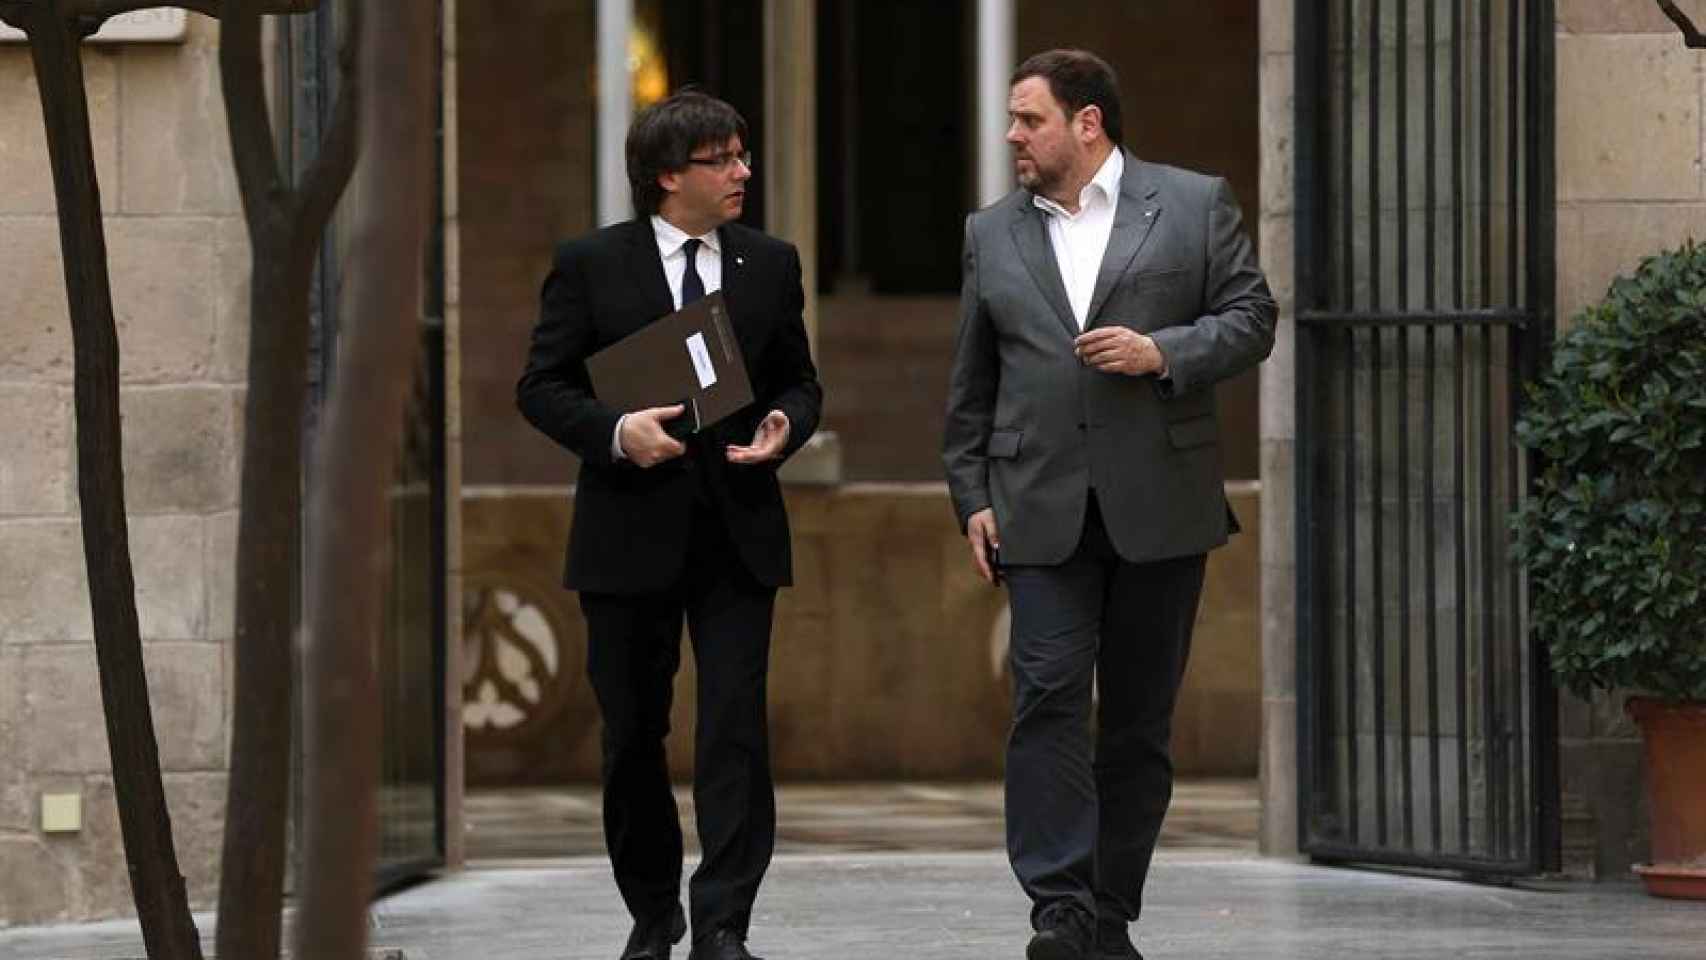 Elpresident de la Generalitat, Carles Puigdemont, junto al vicepresidente, Oriol Junqueras